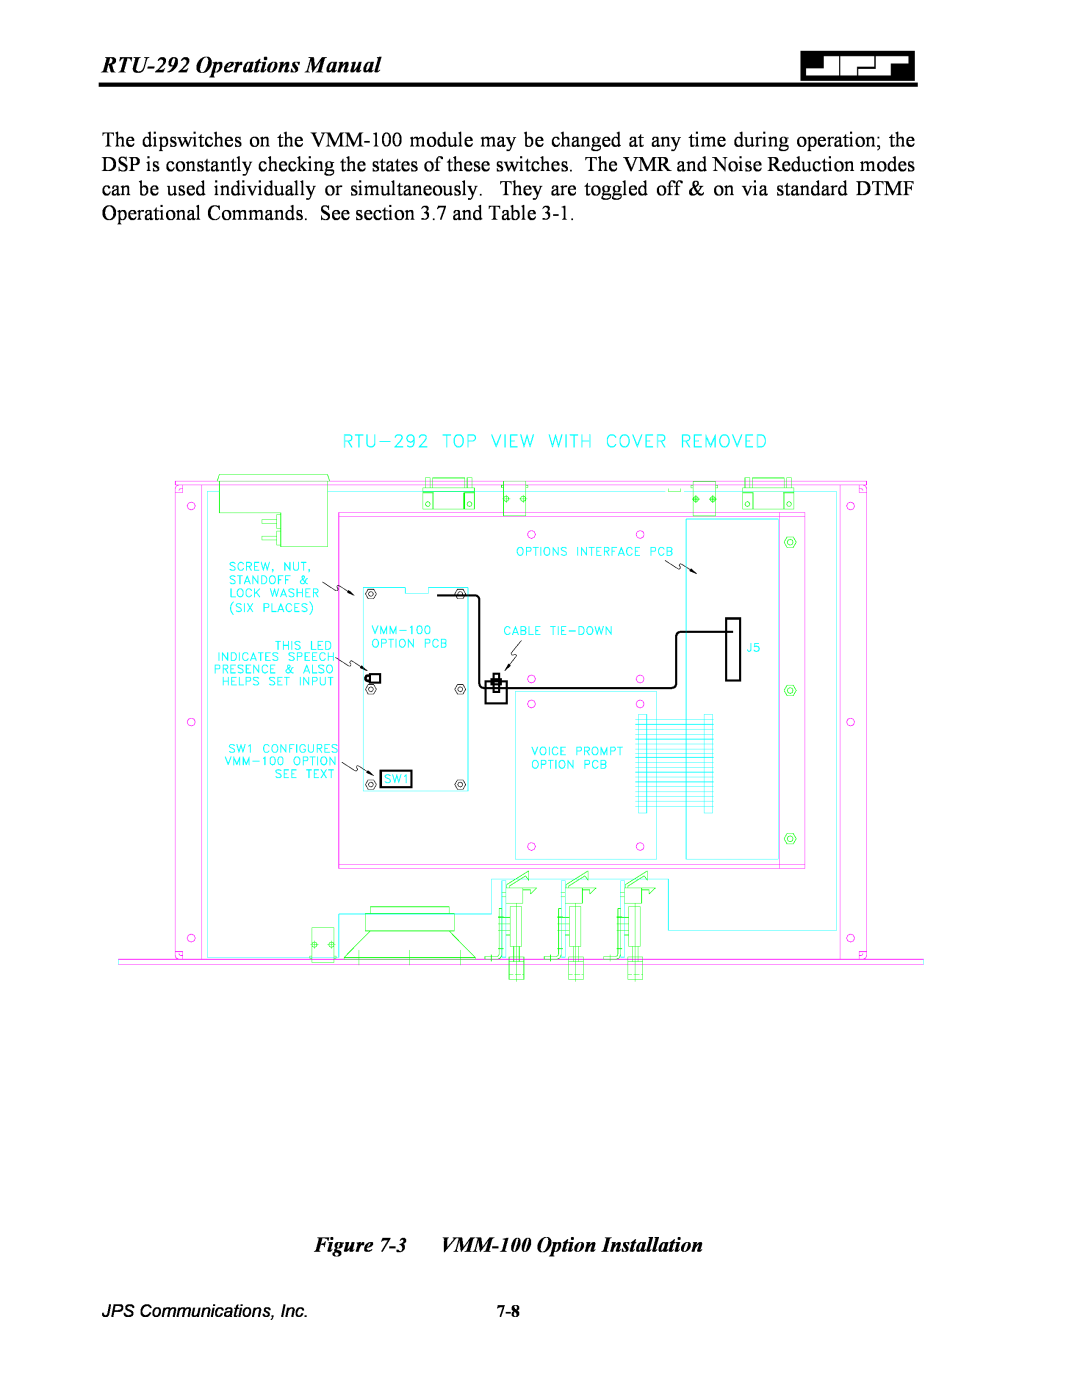 Nortel Networks operation manual RTU-292 Operations Manual, 3 VMM-100 Option Installation 